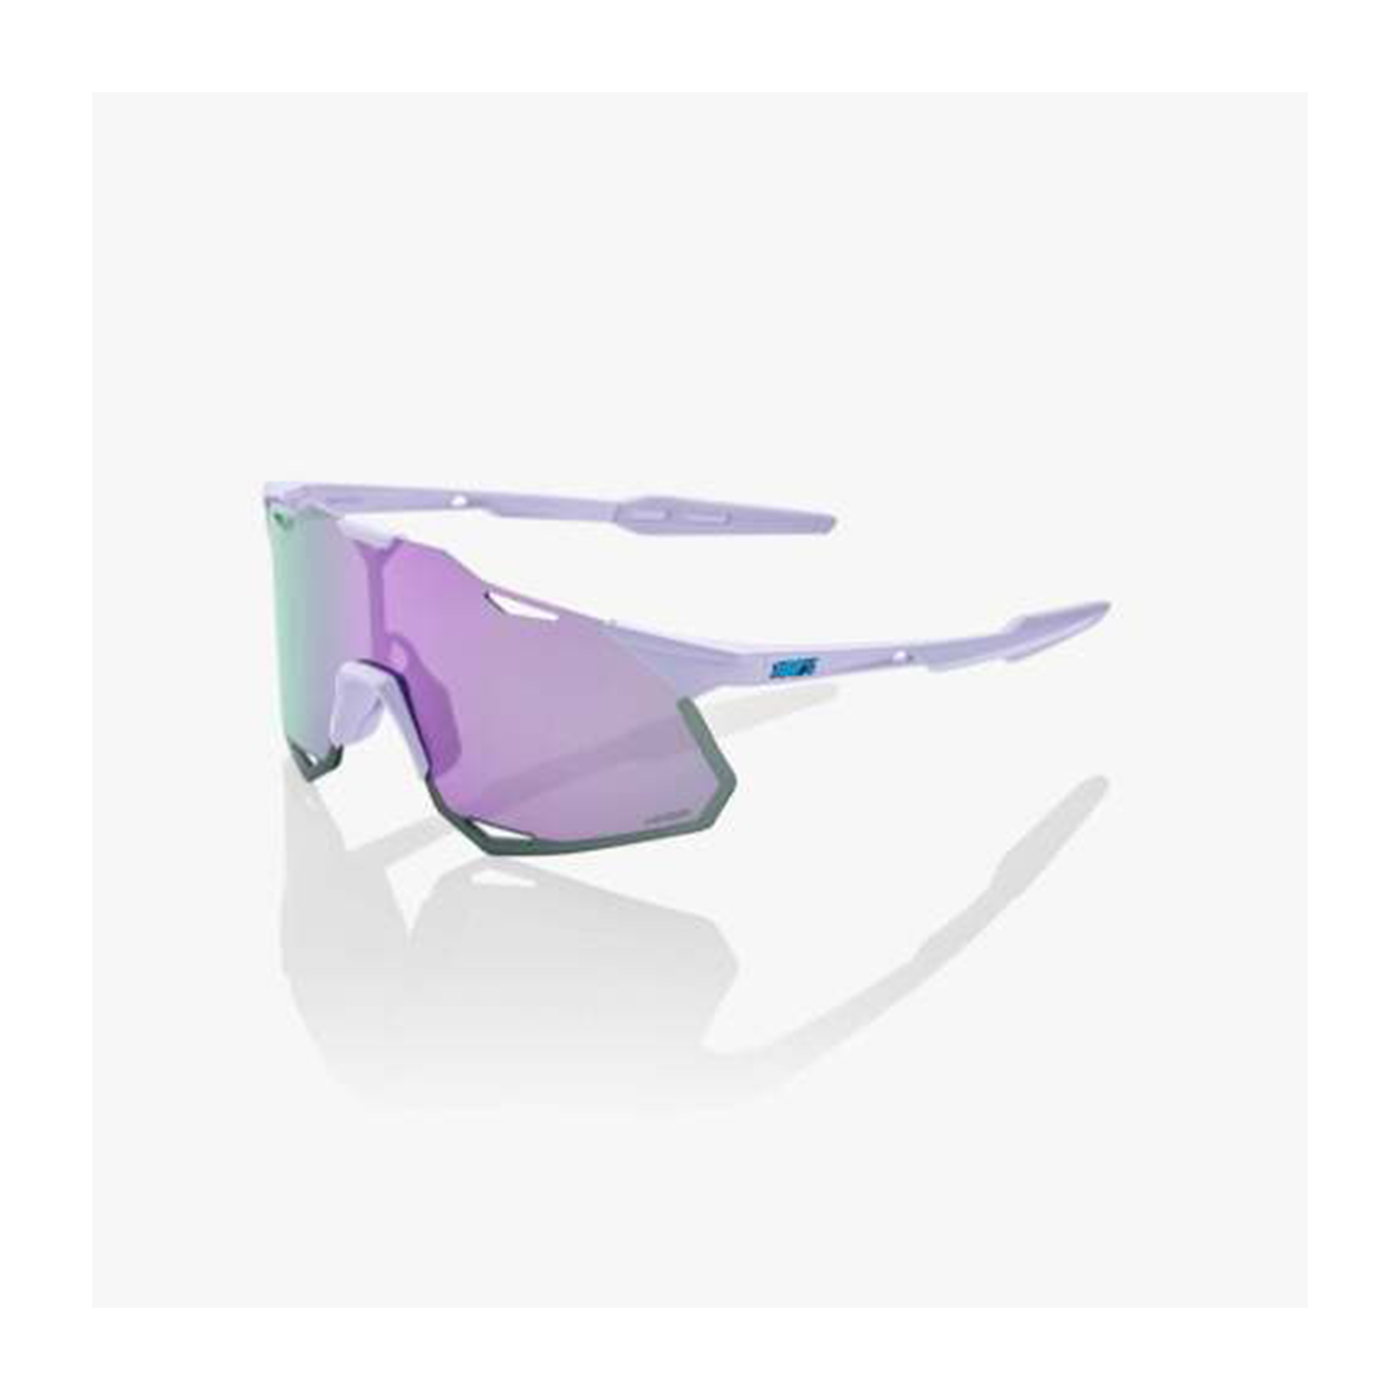 Hypercraft XS Sunglasses